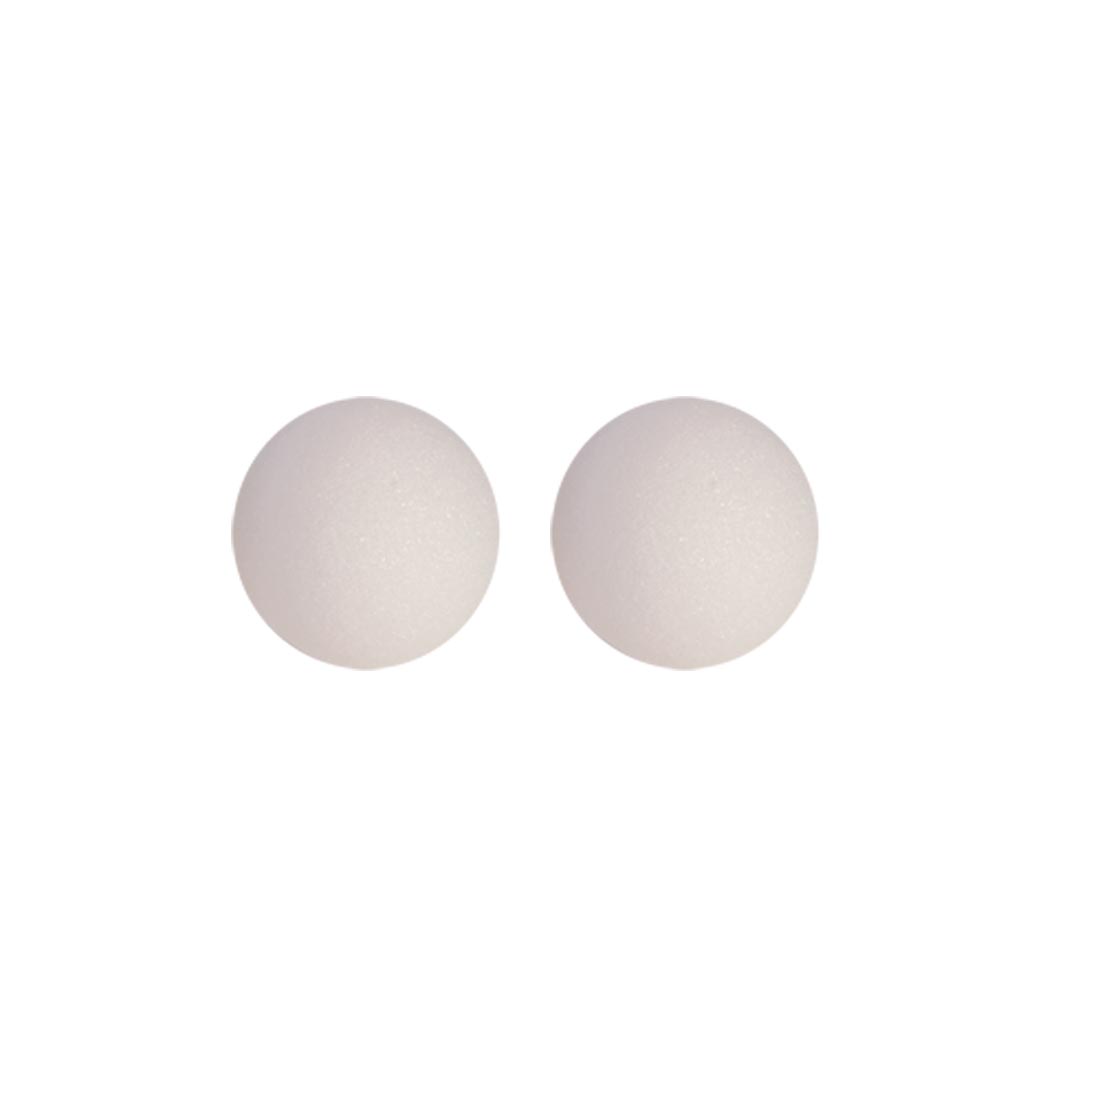 Two White craft foam Balls